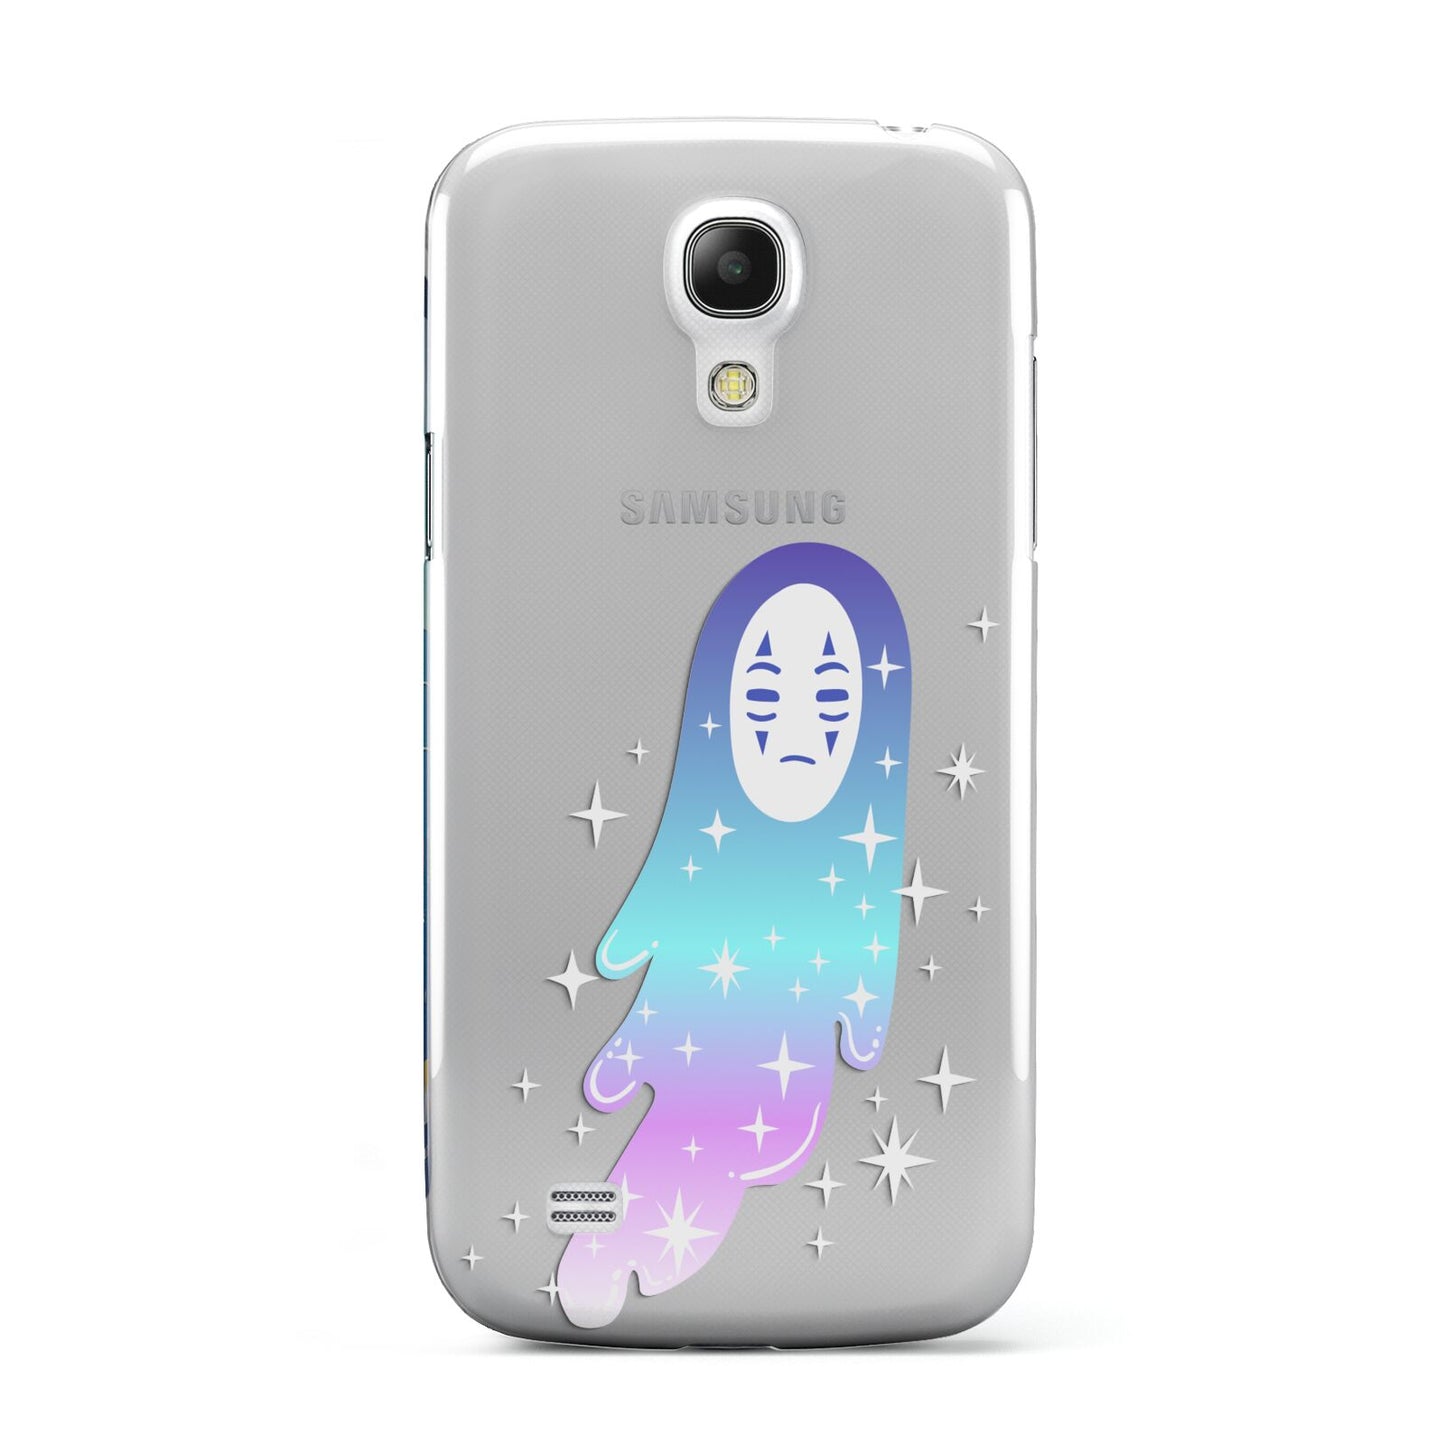 Starry Spectre Samsung Galaxy S4 Mini Case